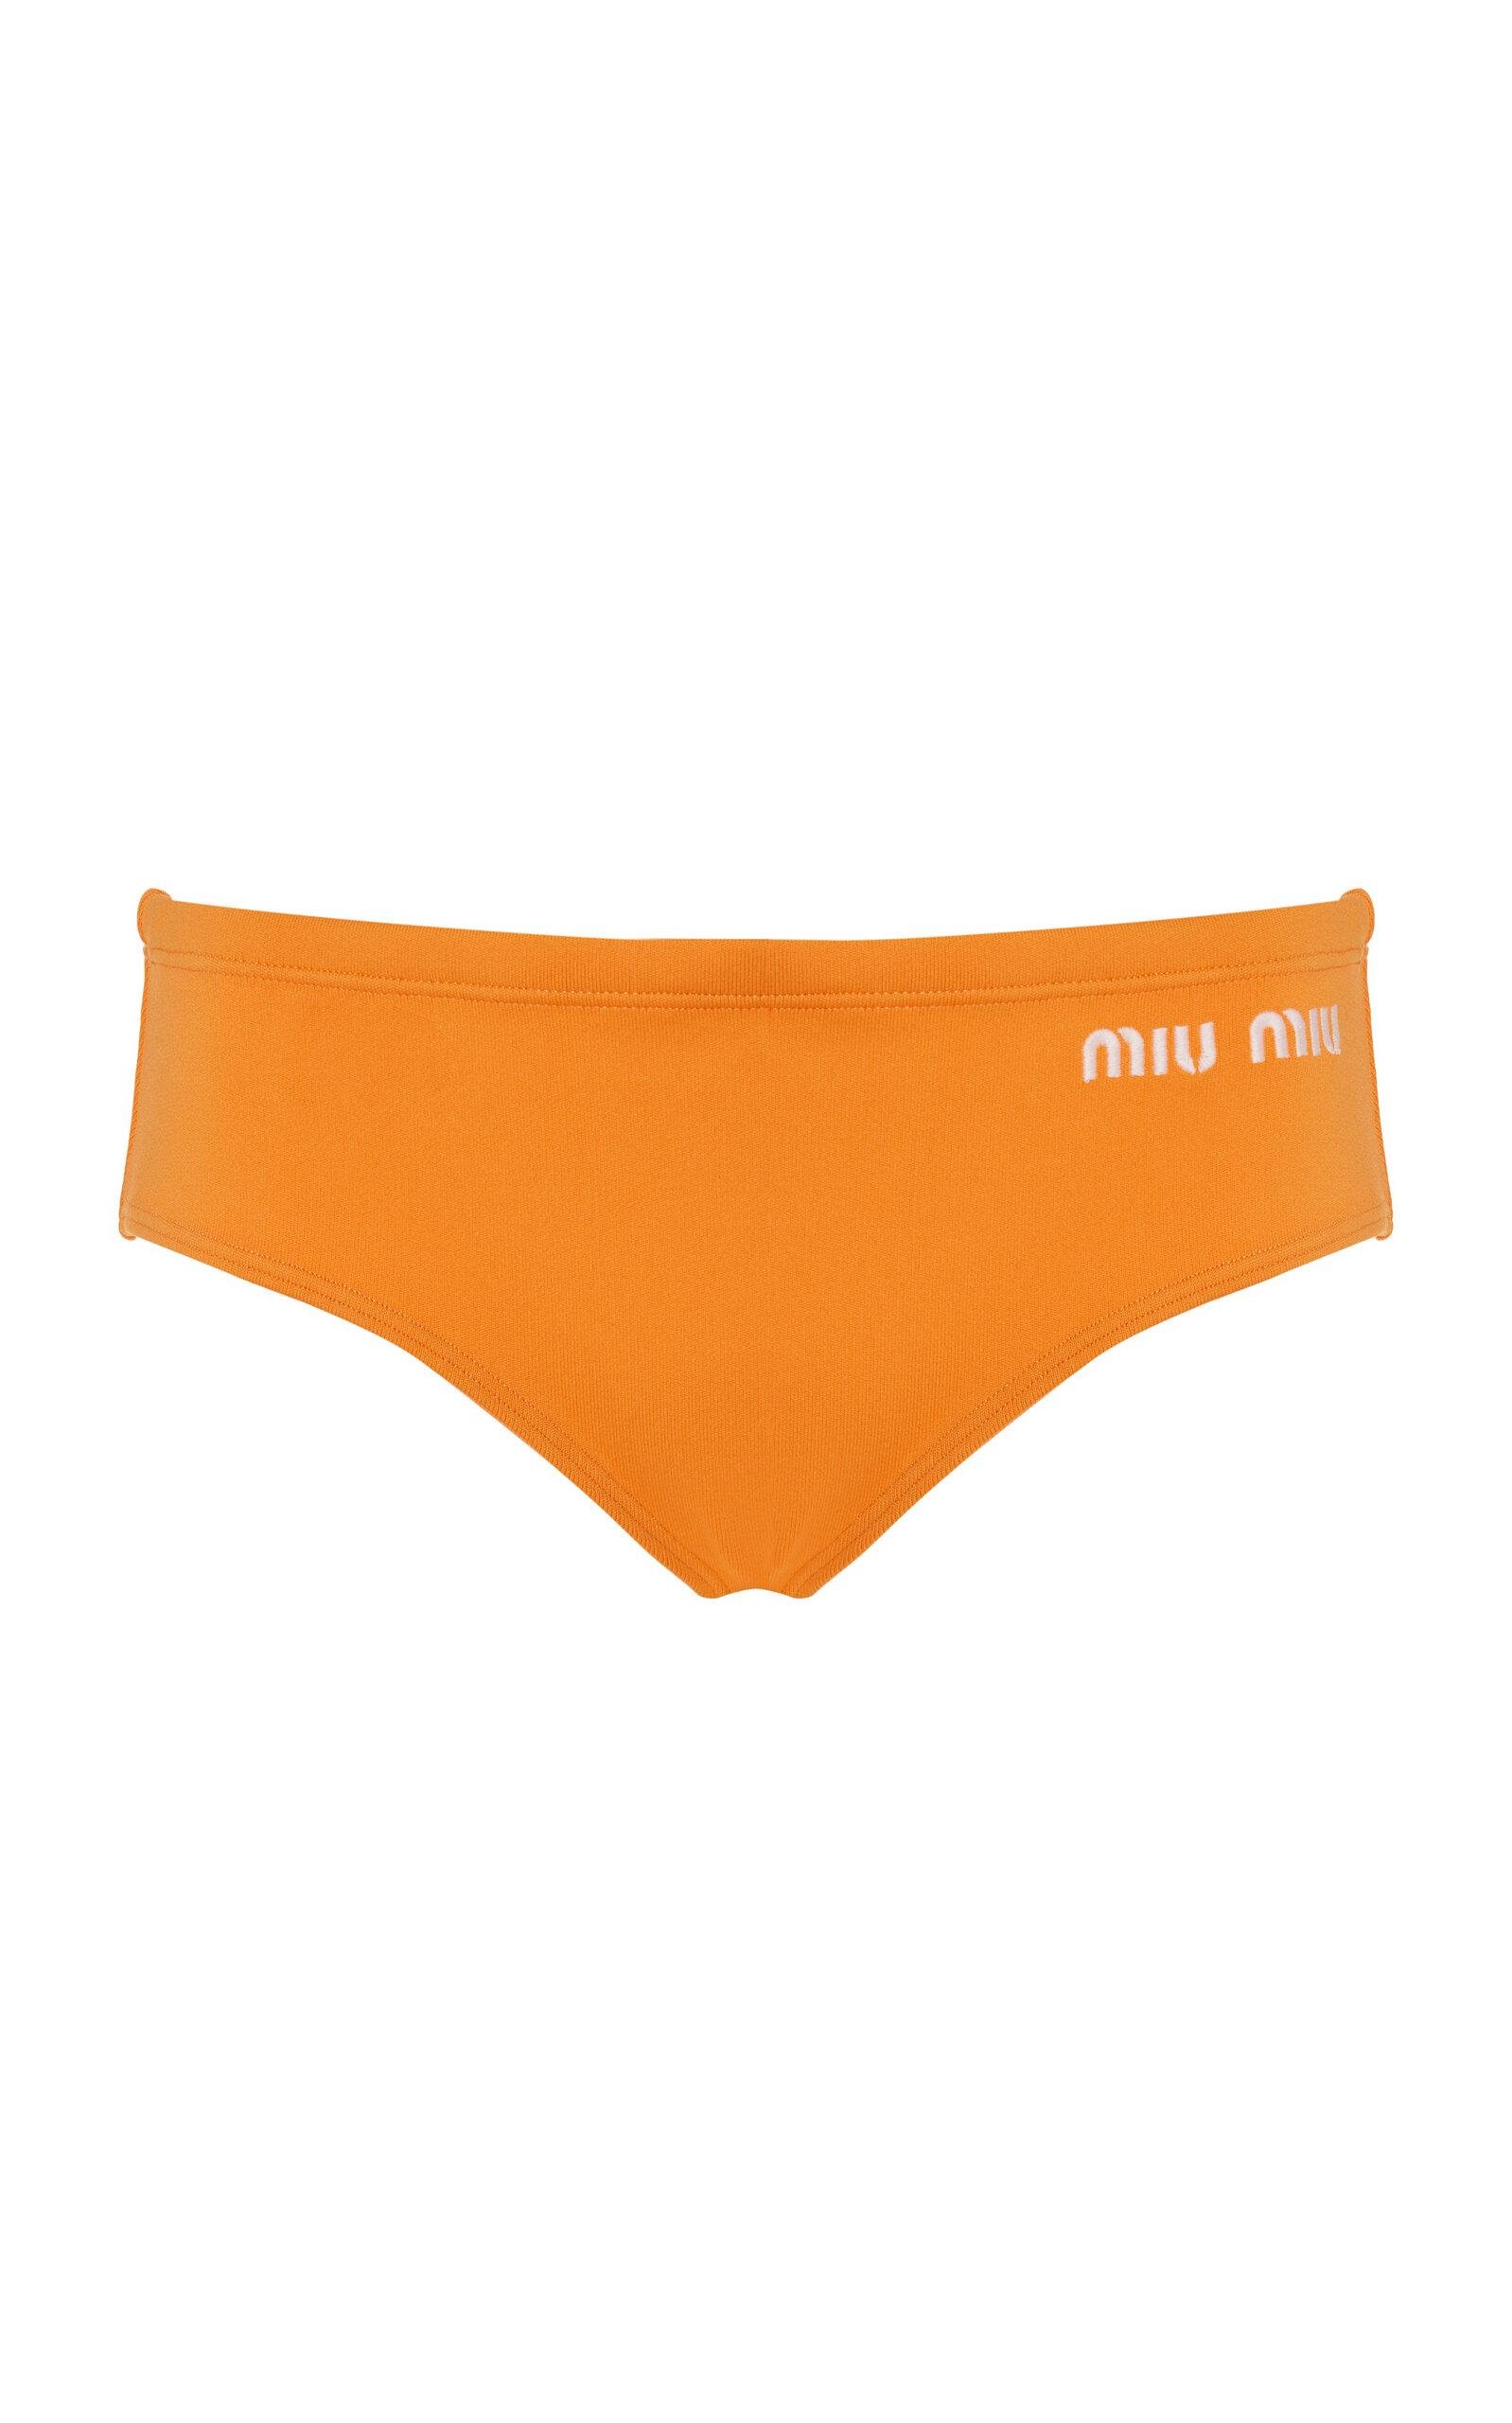 Miu Miu - Logo-Knit Nylon Panties - Orange - IT 42 - Moda Operandi by MIU MIU